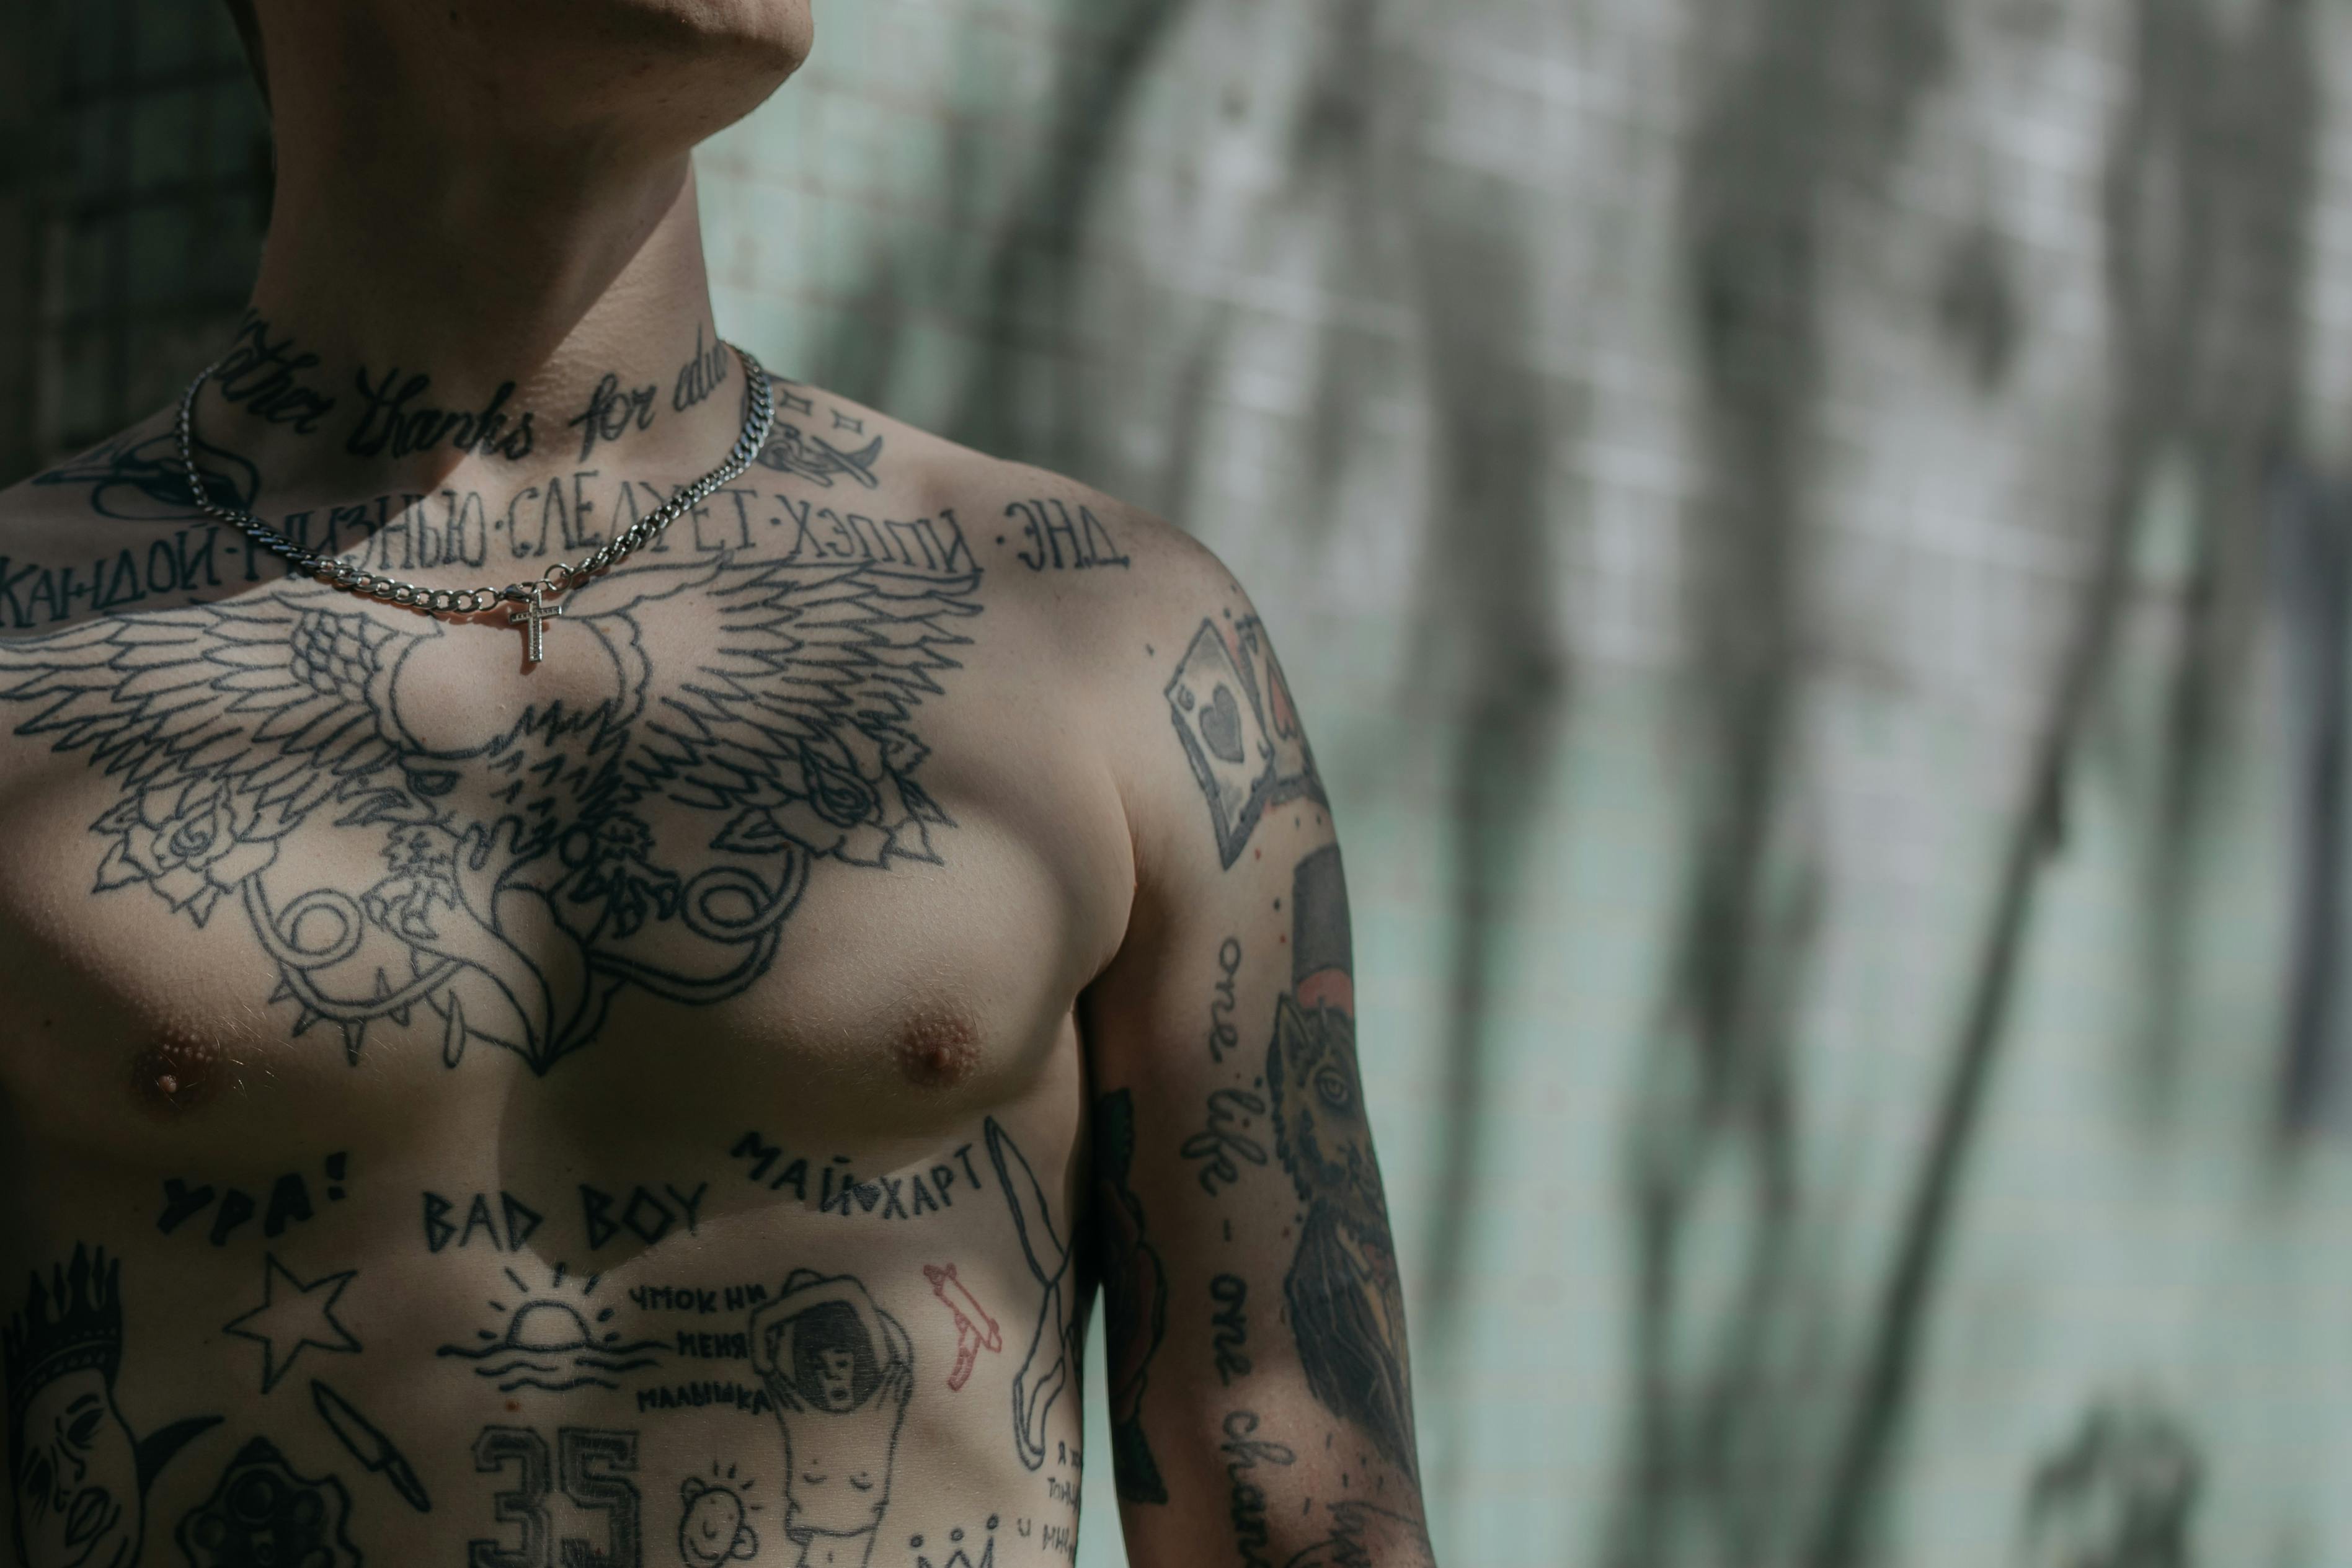 Phonics Tattoo | Tattoos for guys, Hand tattoos for guys, Hand tattoos